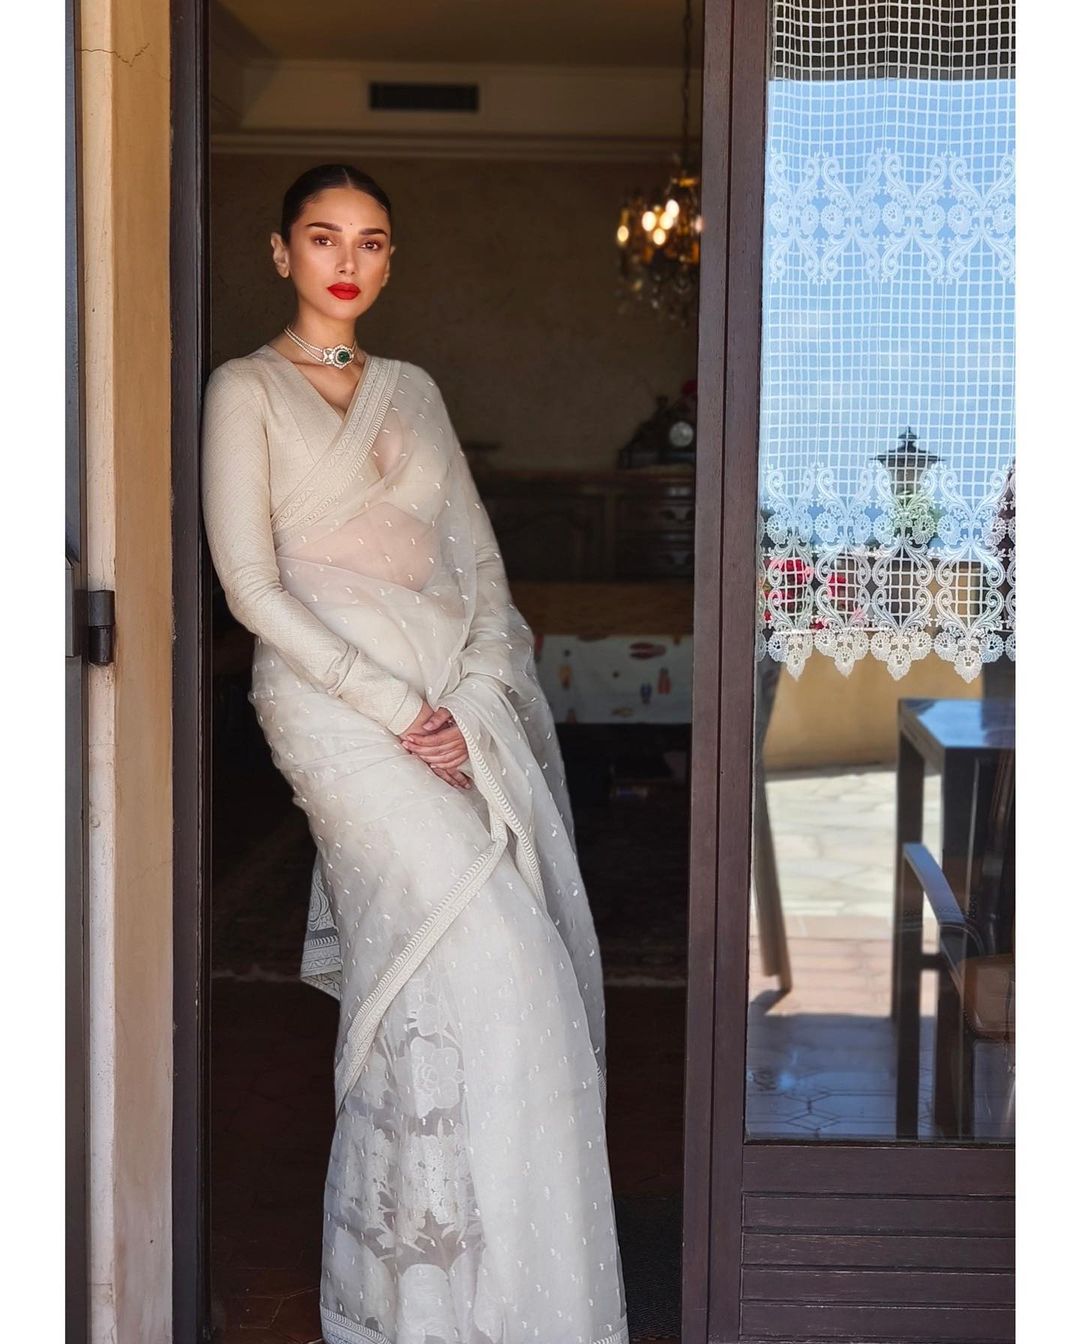 Aditi Rao Hydari spells elegance in a white Sabysachi saree